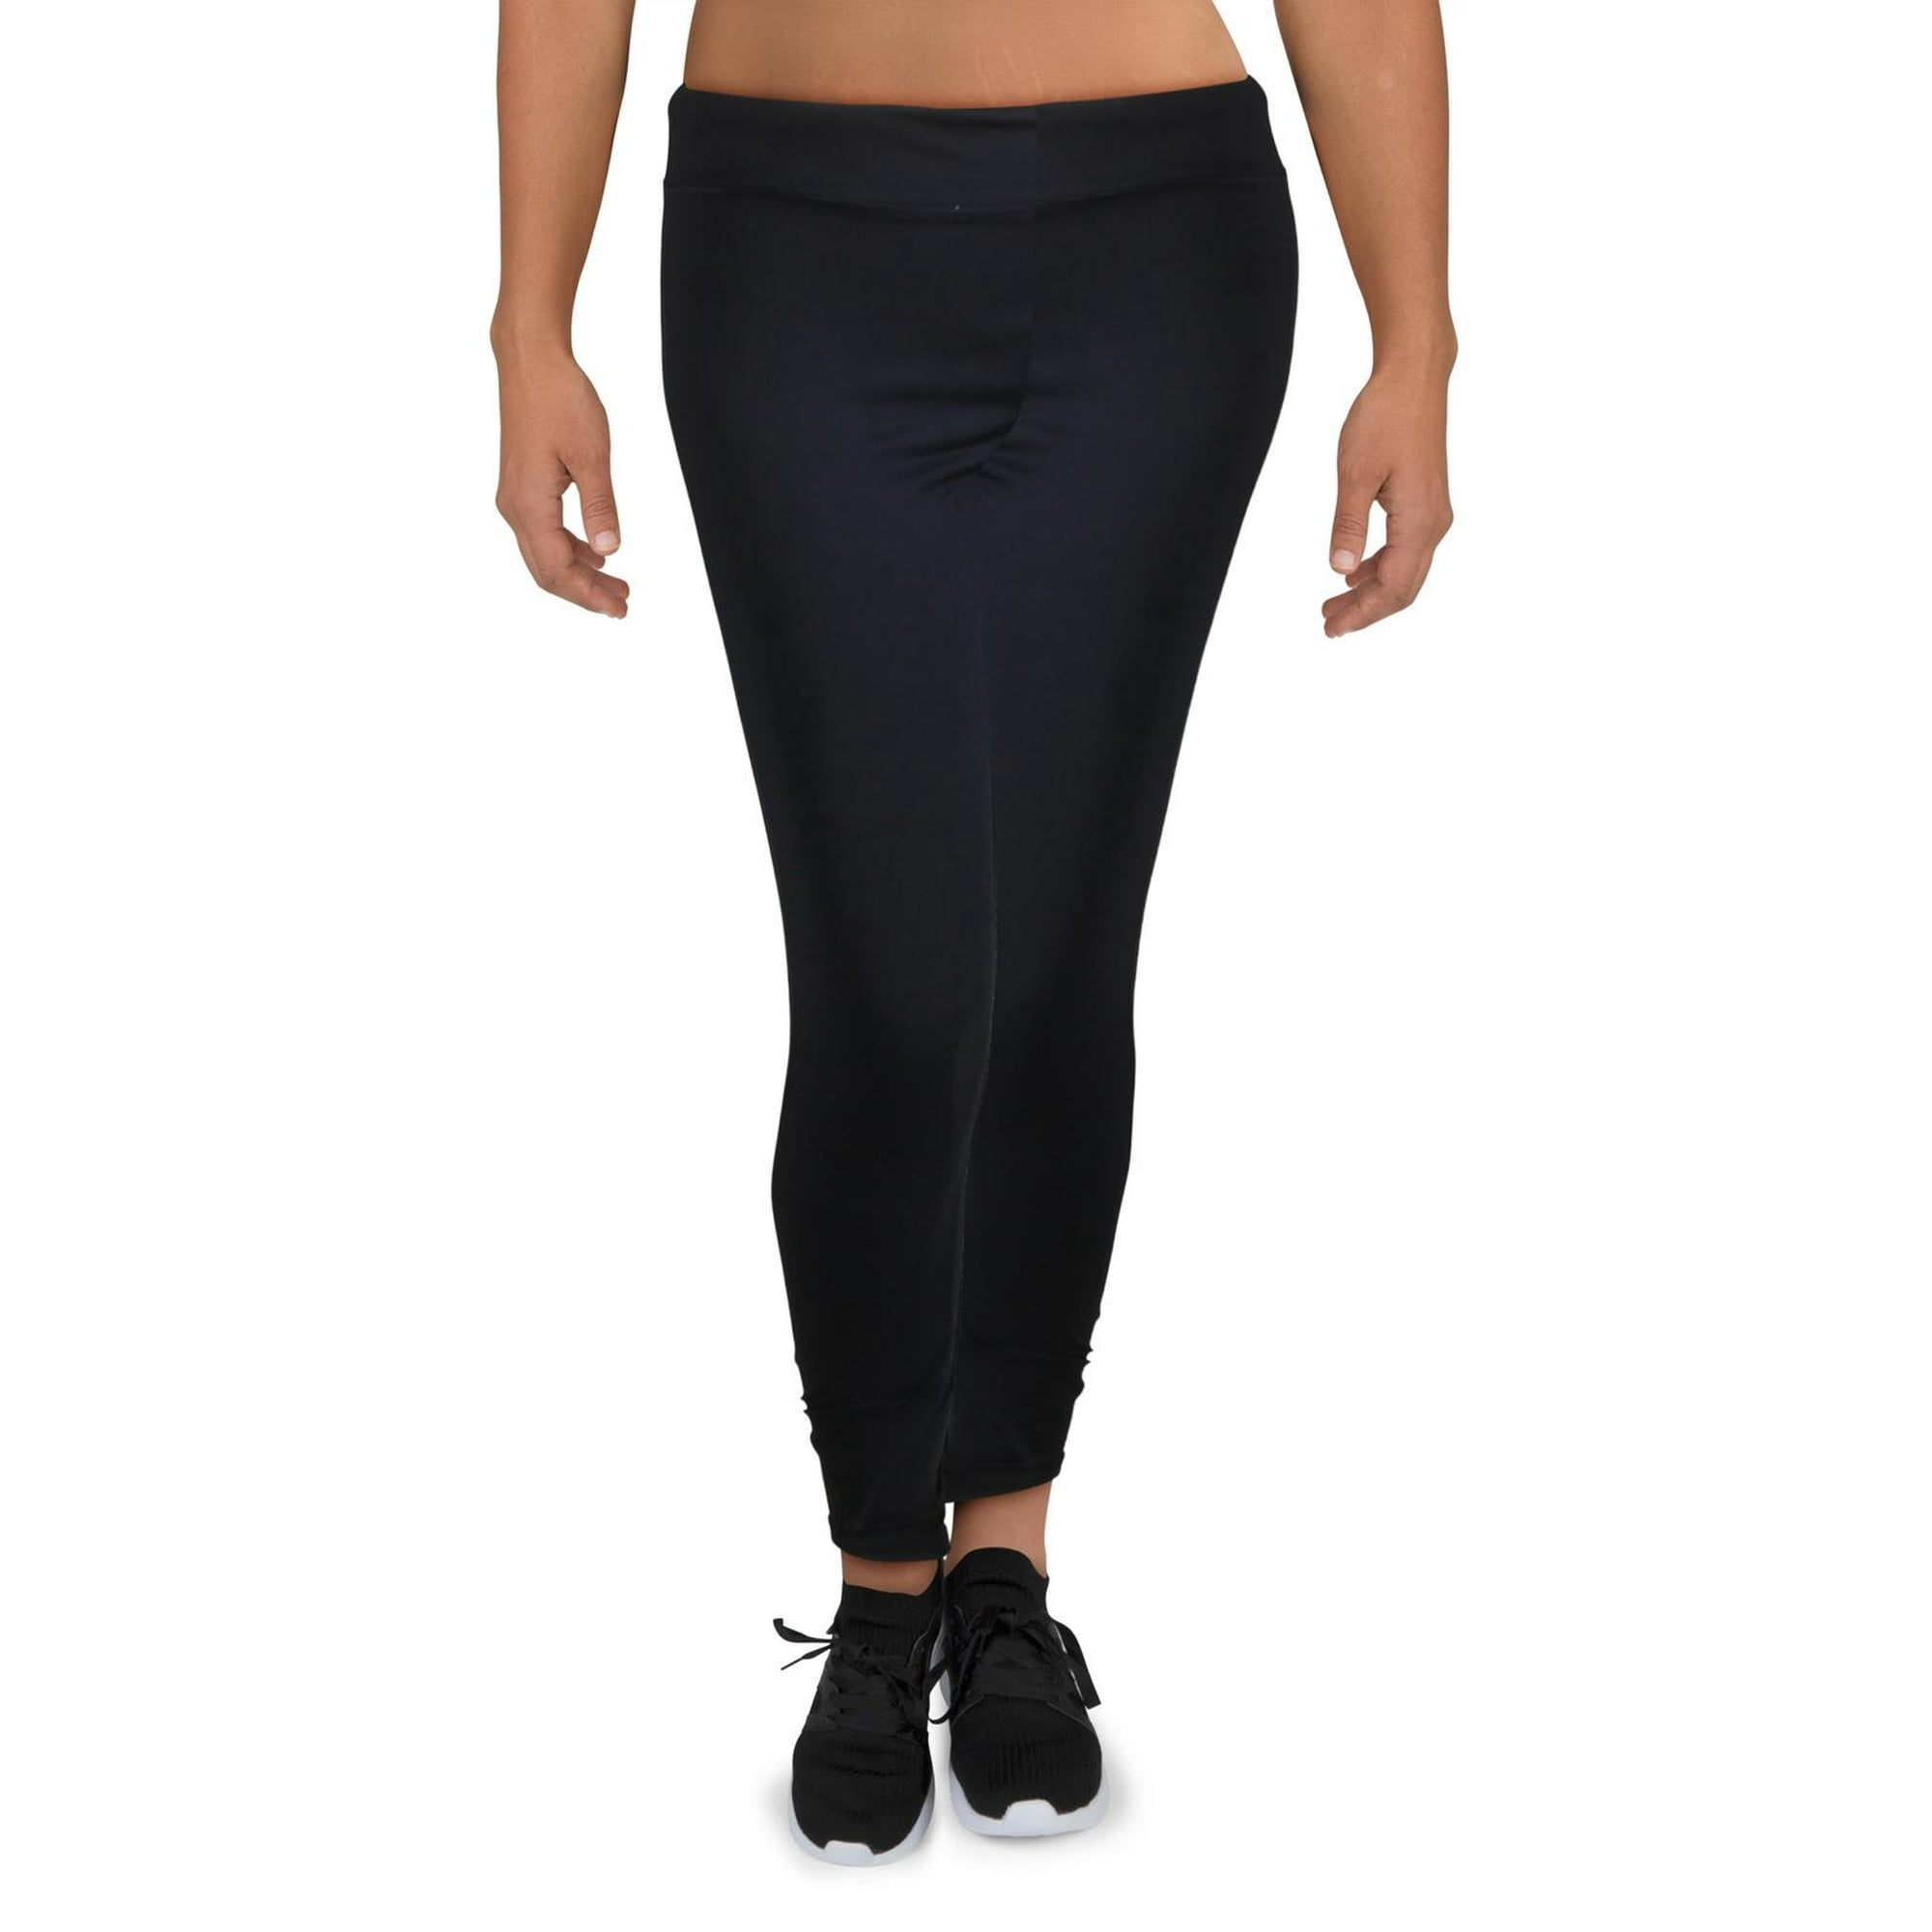 Gaiam Womens Fitness Yoga Athletic Leggings Black XL, 56% OFF